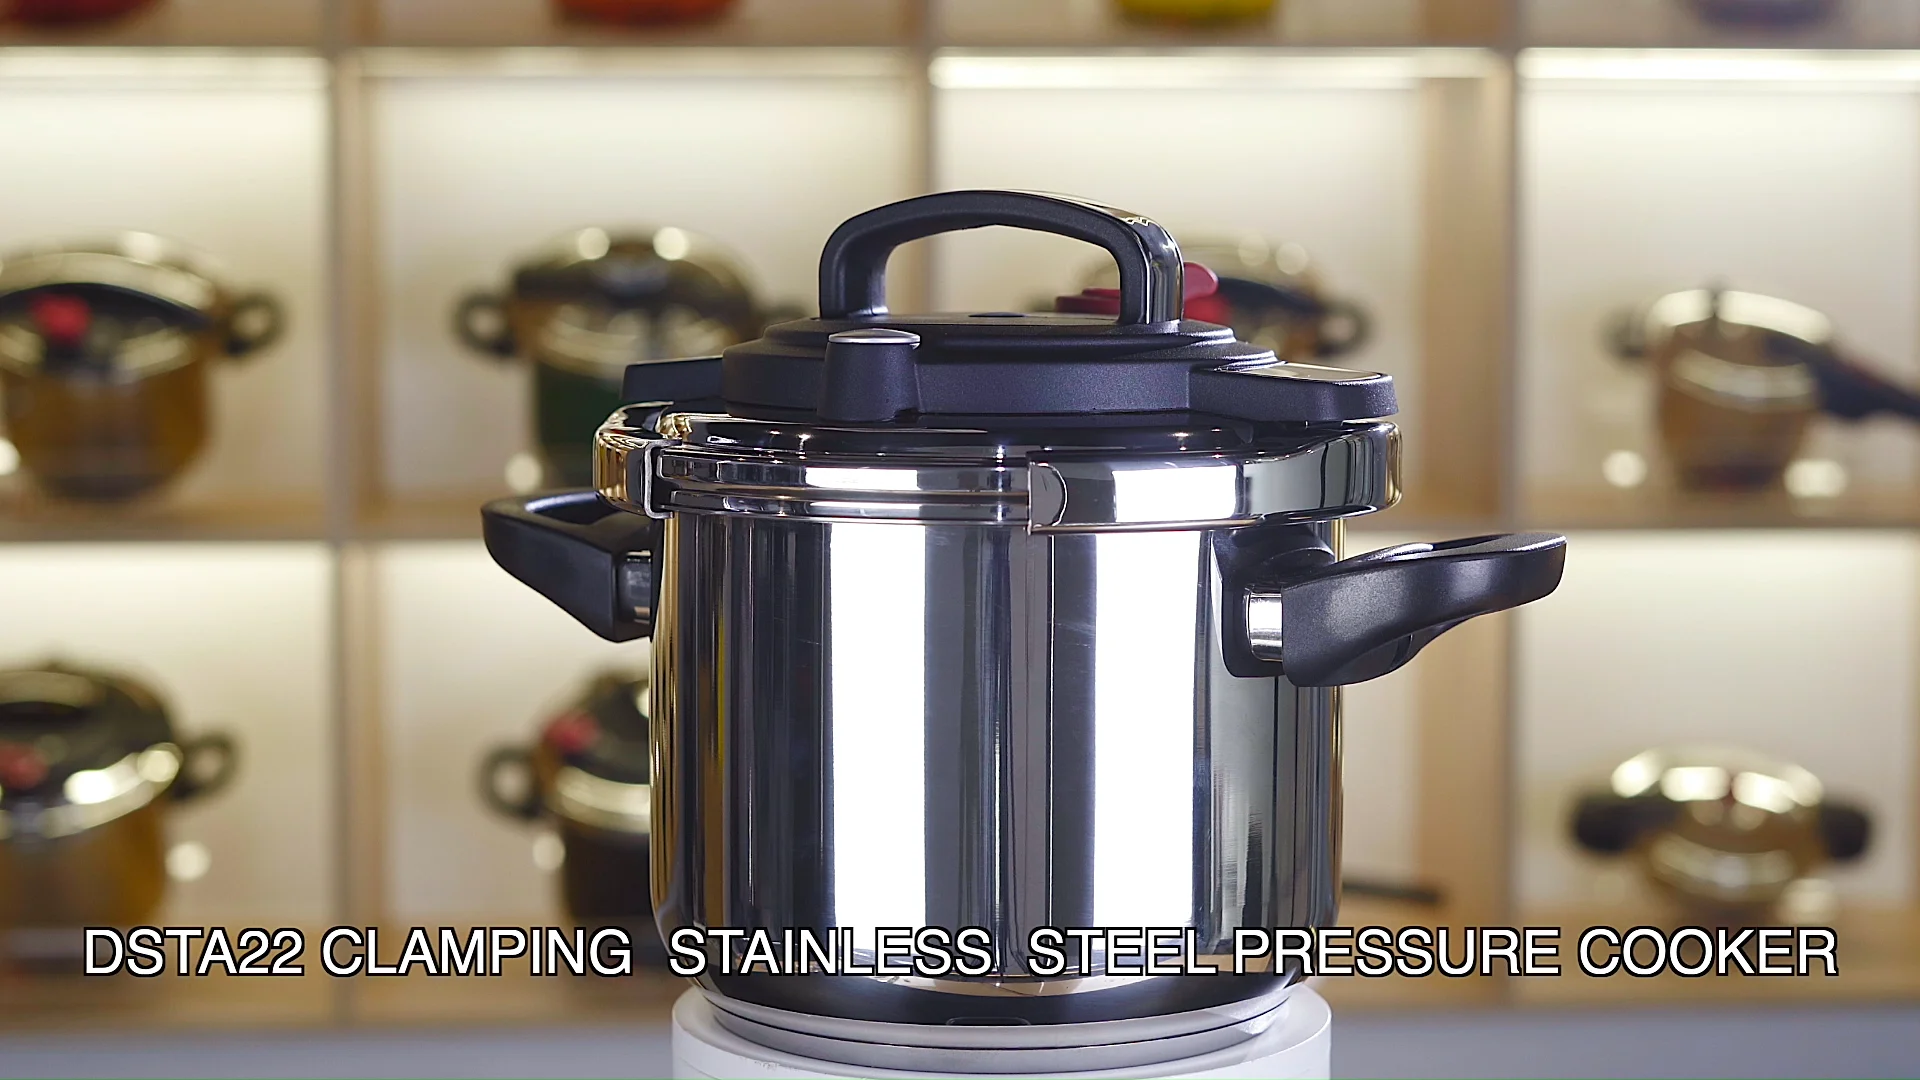 SOFRAM Stainless Steel Pressure Cooker(6 L)